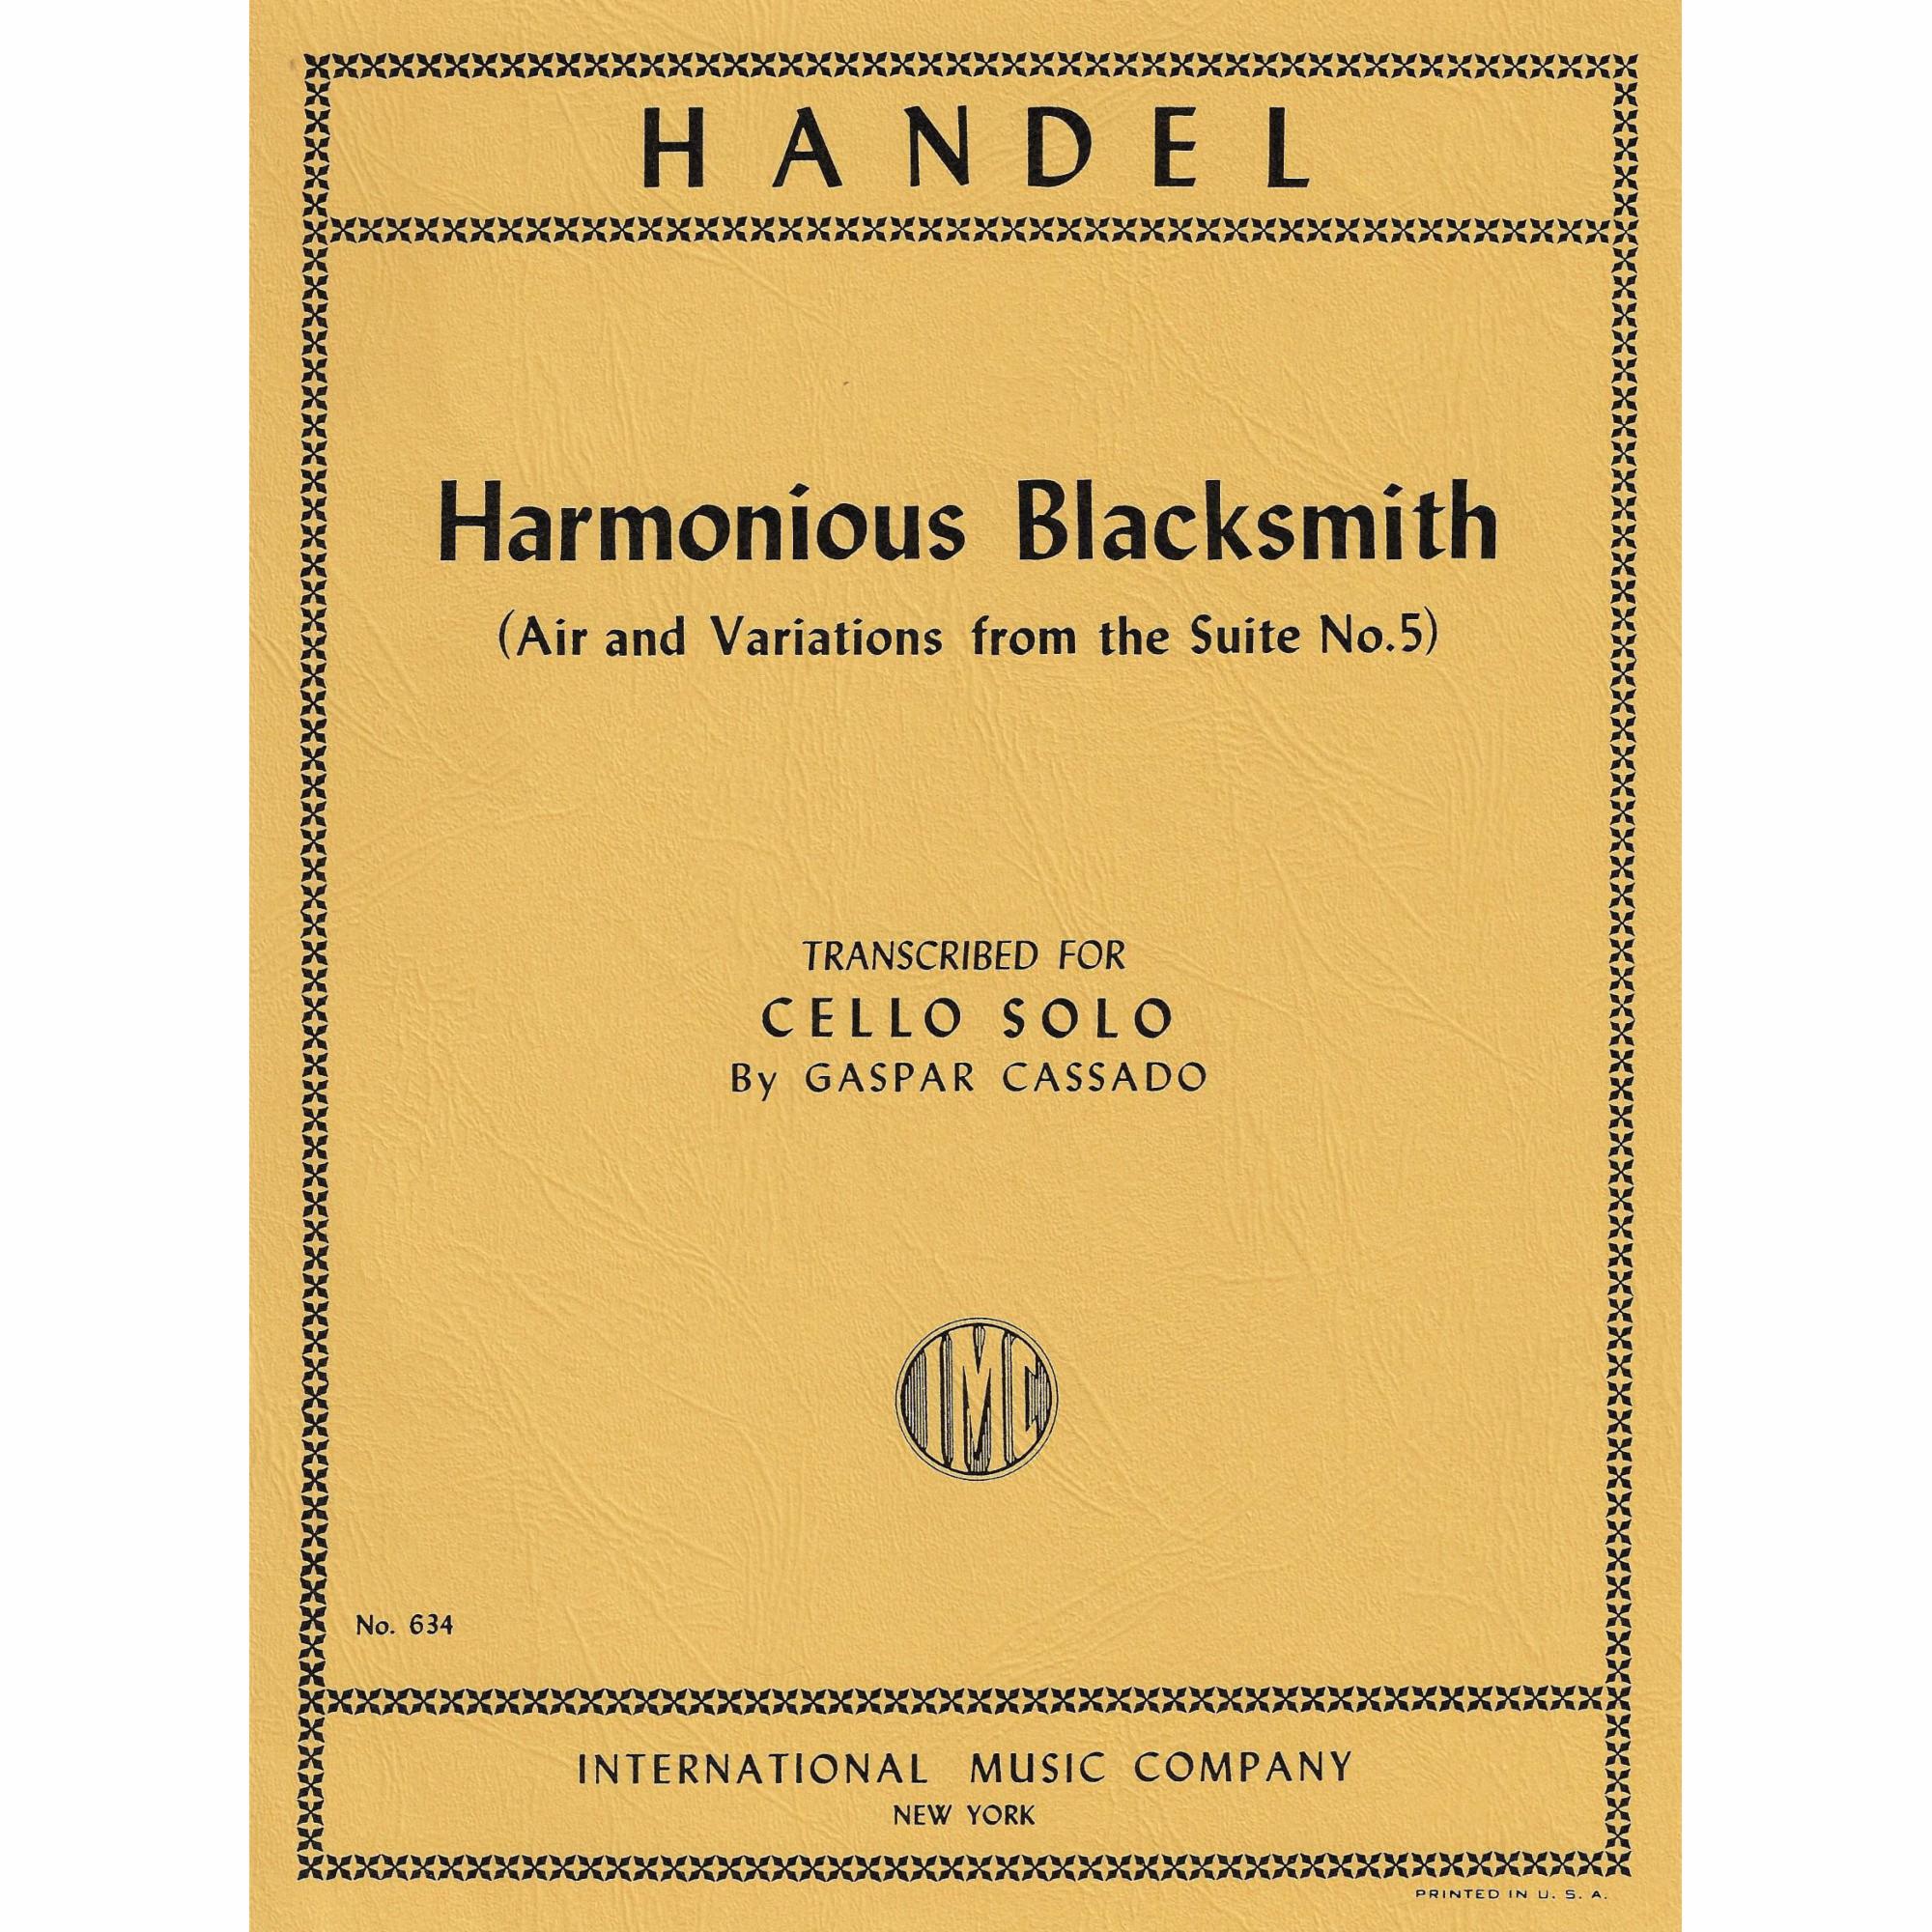 Handel -- Harmonious Blacksmith for Solo Cello